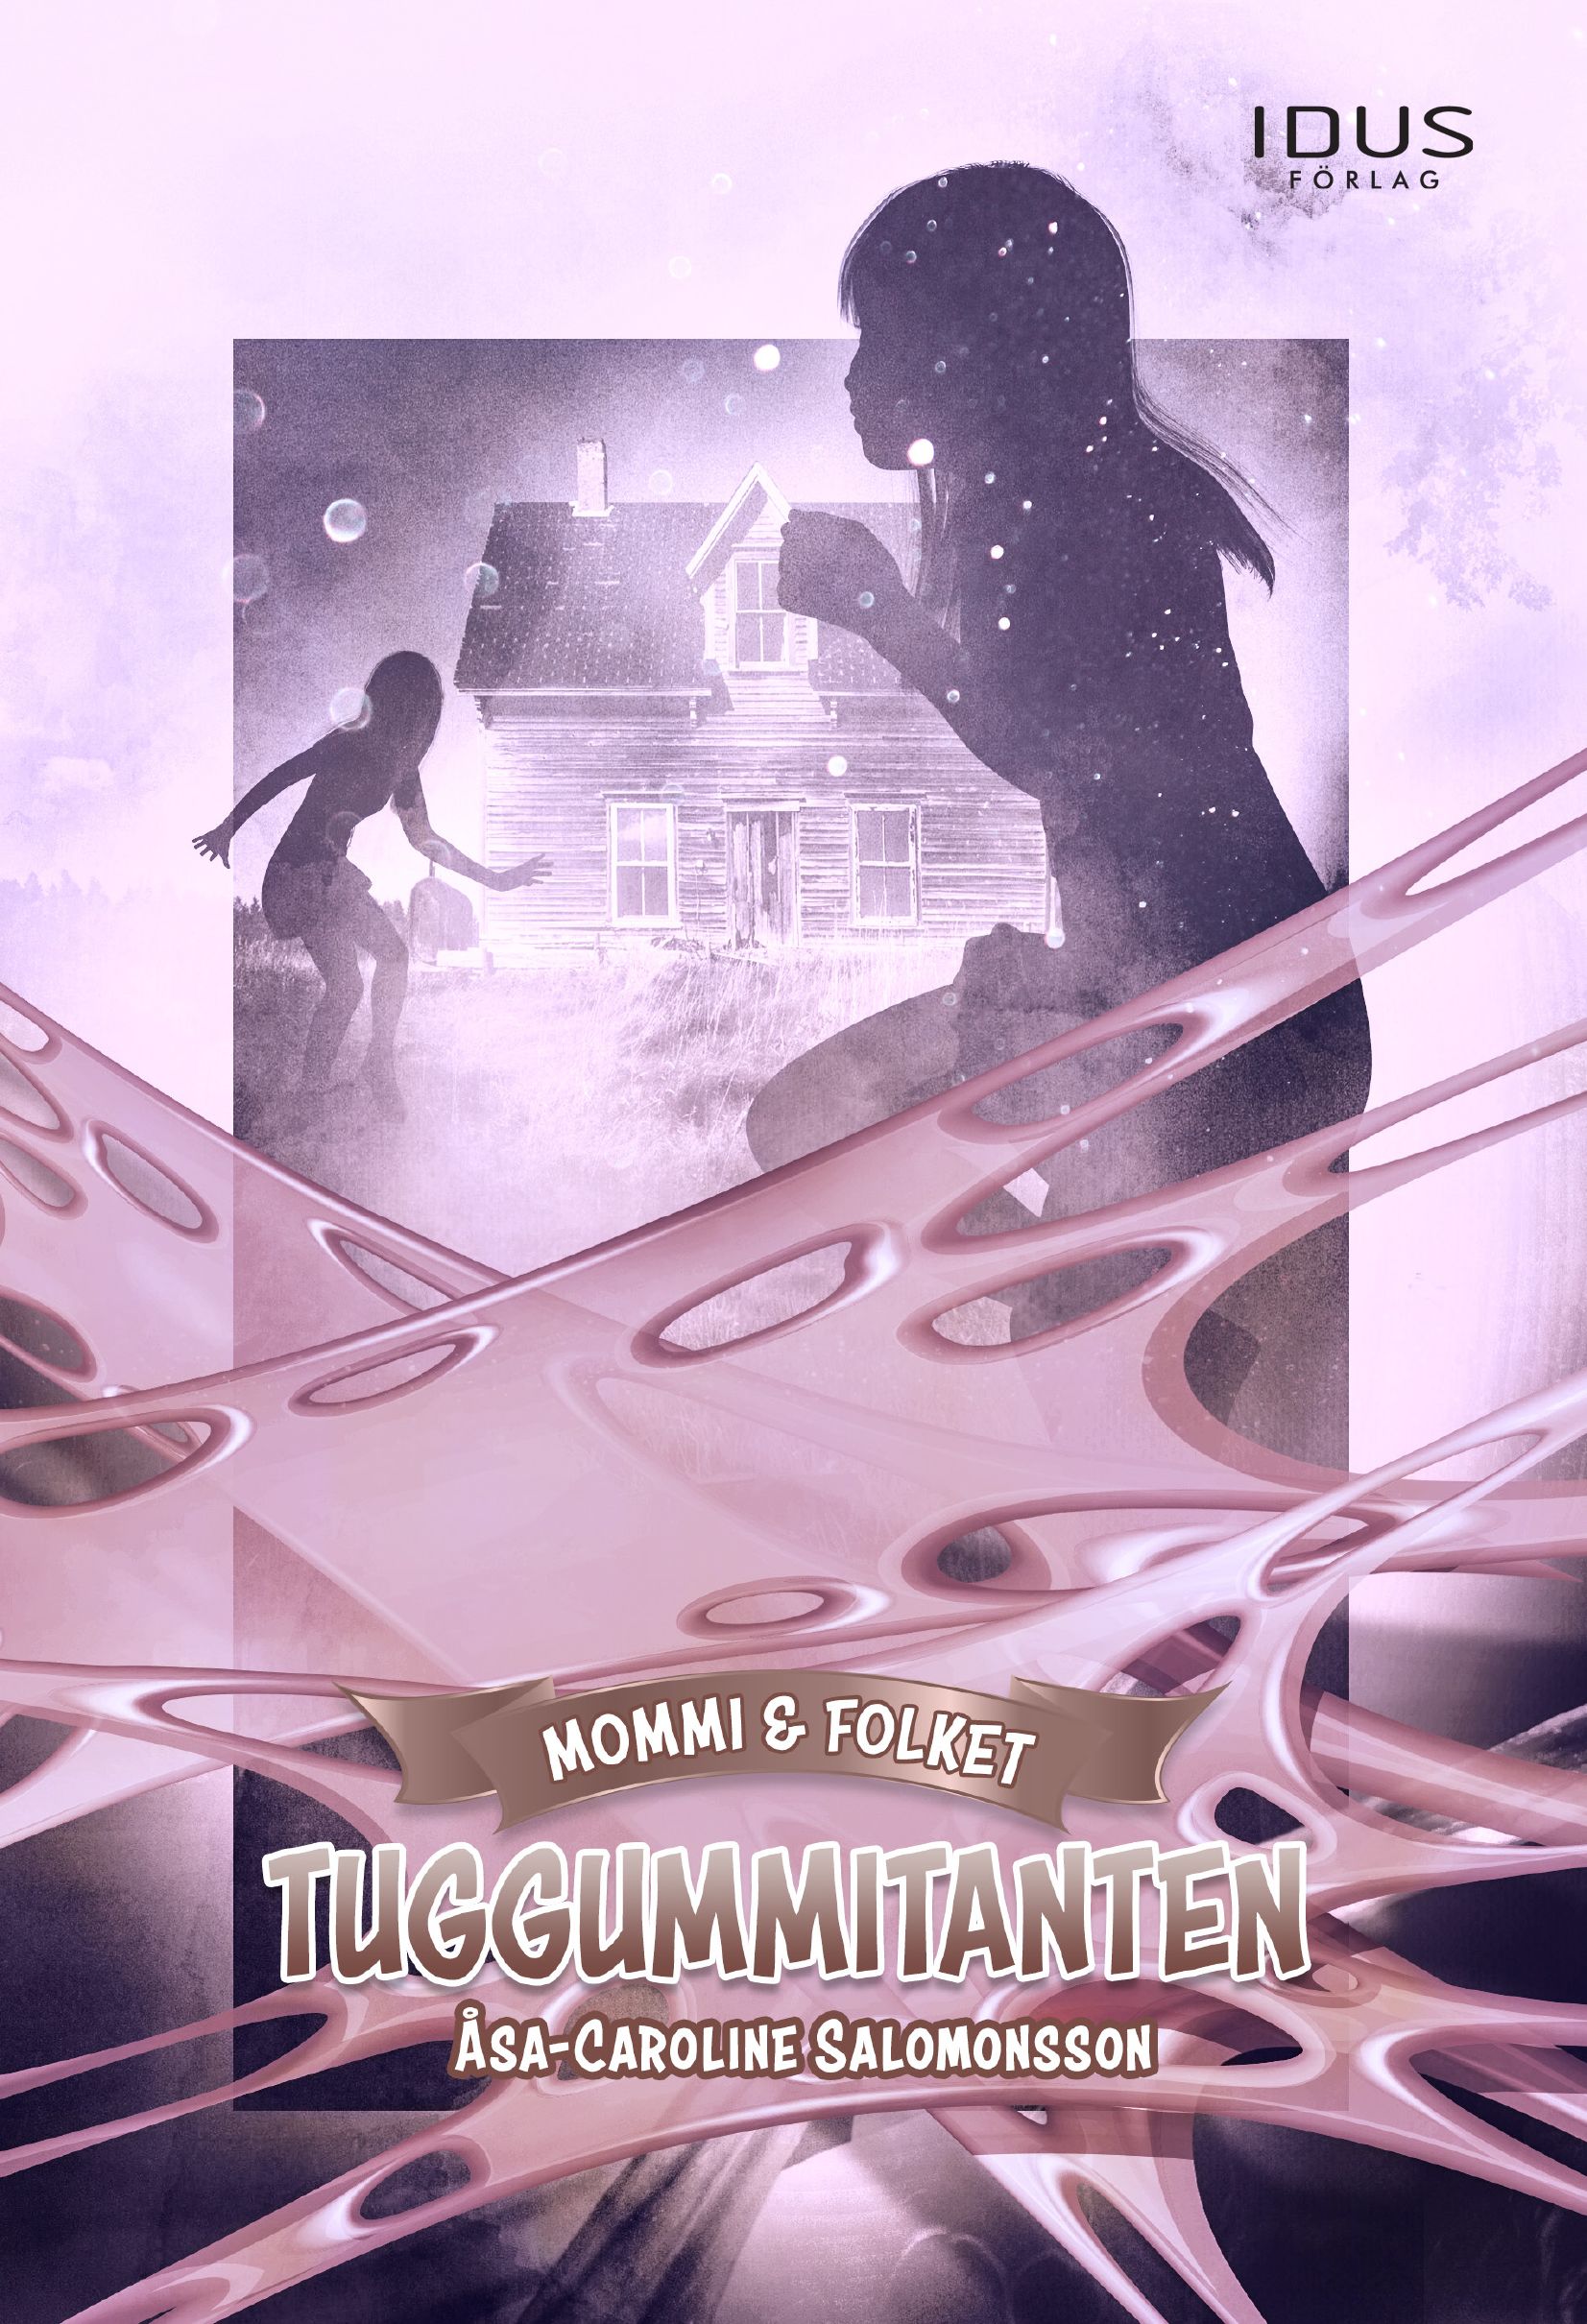 Tuggummitanten, eBook by Åsa-Caroline Salomonsson